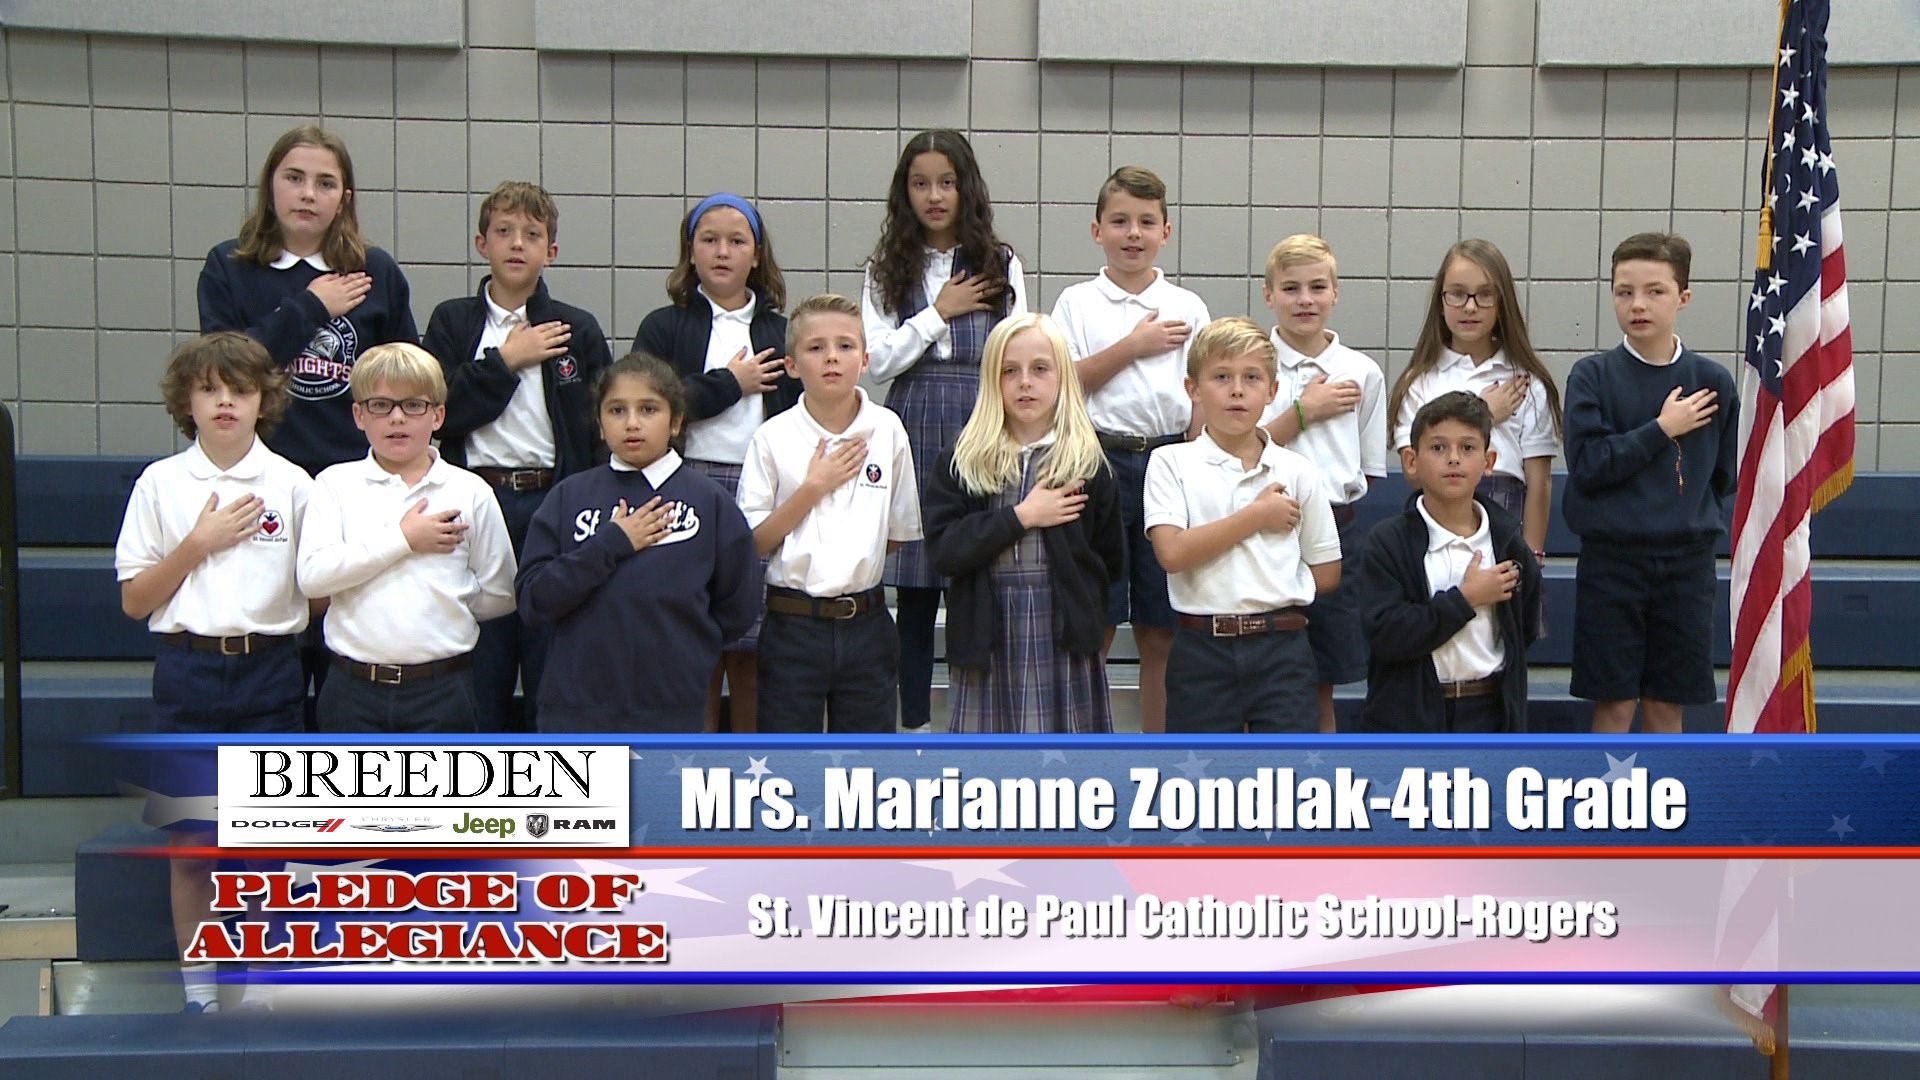 Mrs. Marianna Zondlak  4th Grade  St. Vincent de Paul Catholic School - Rogers